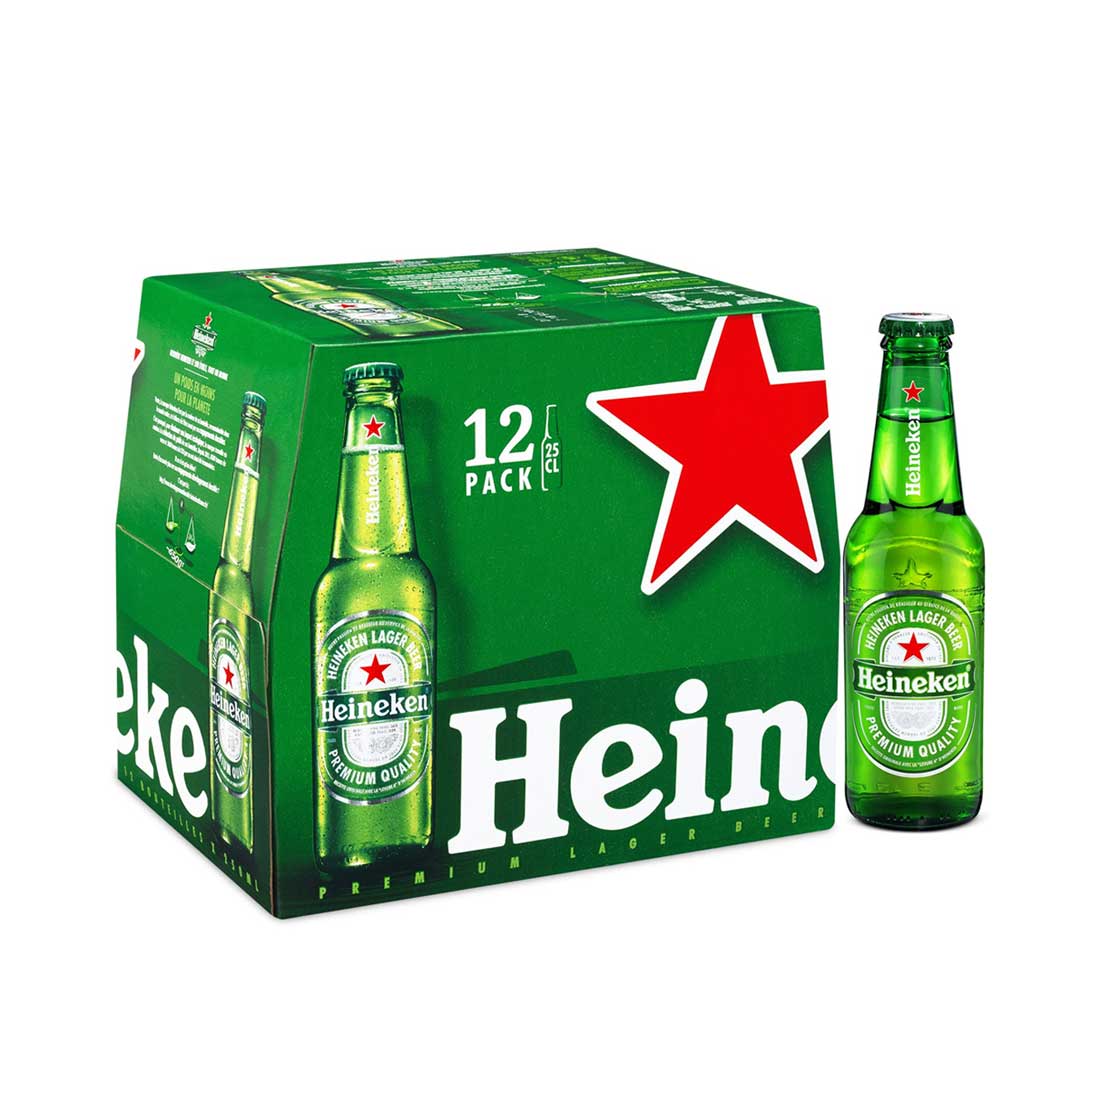 Heineken pack 12 nantes